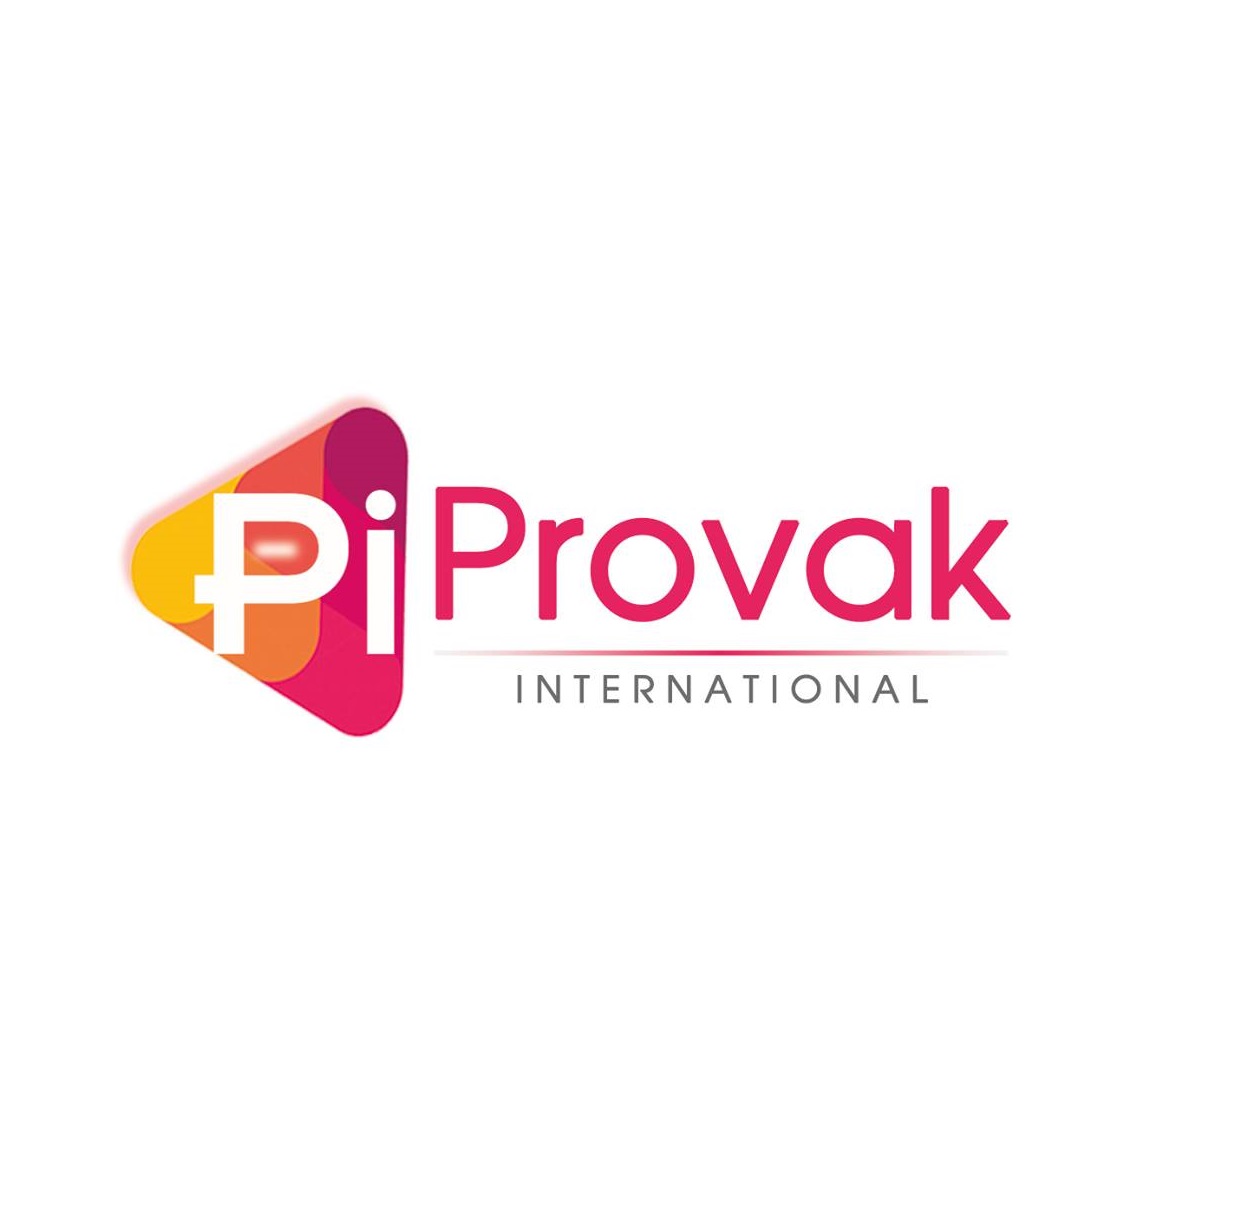 Provak international